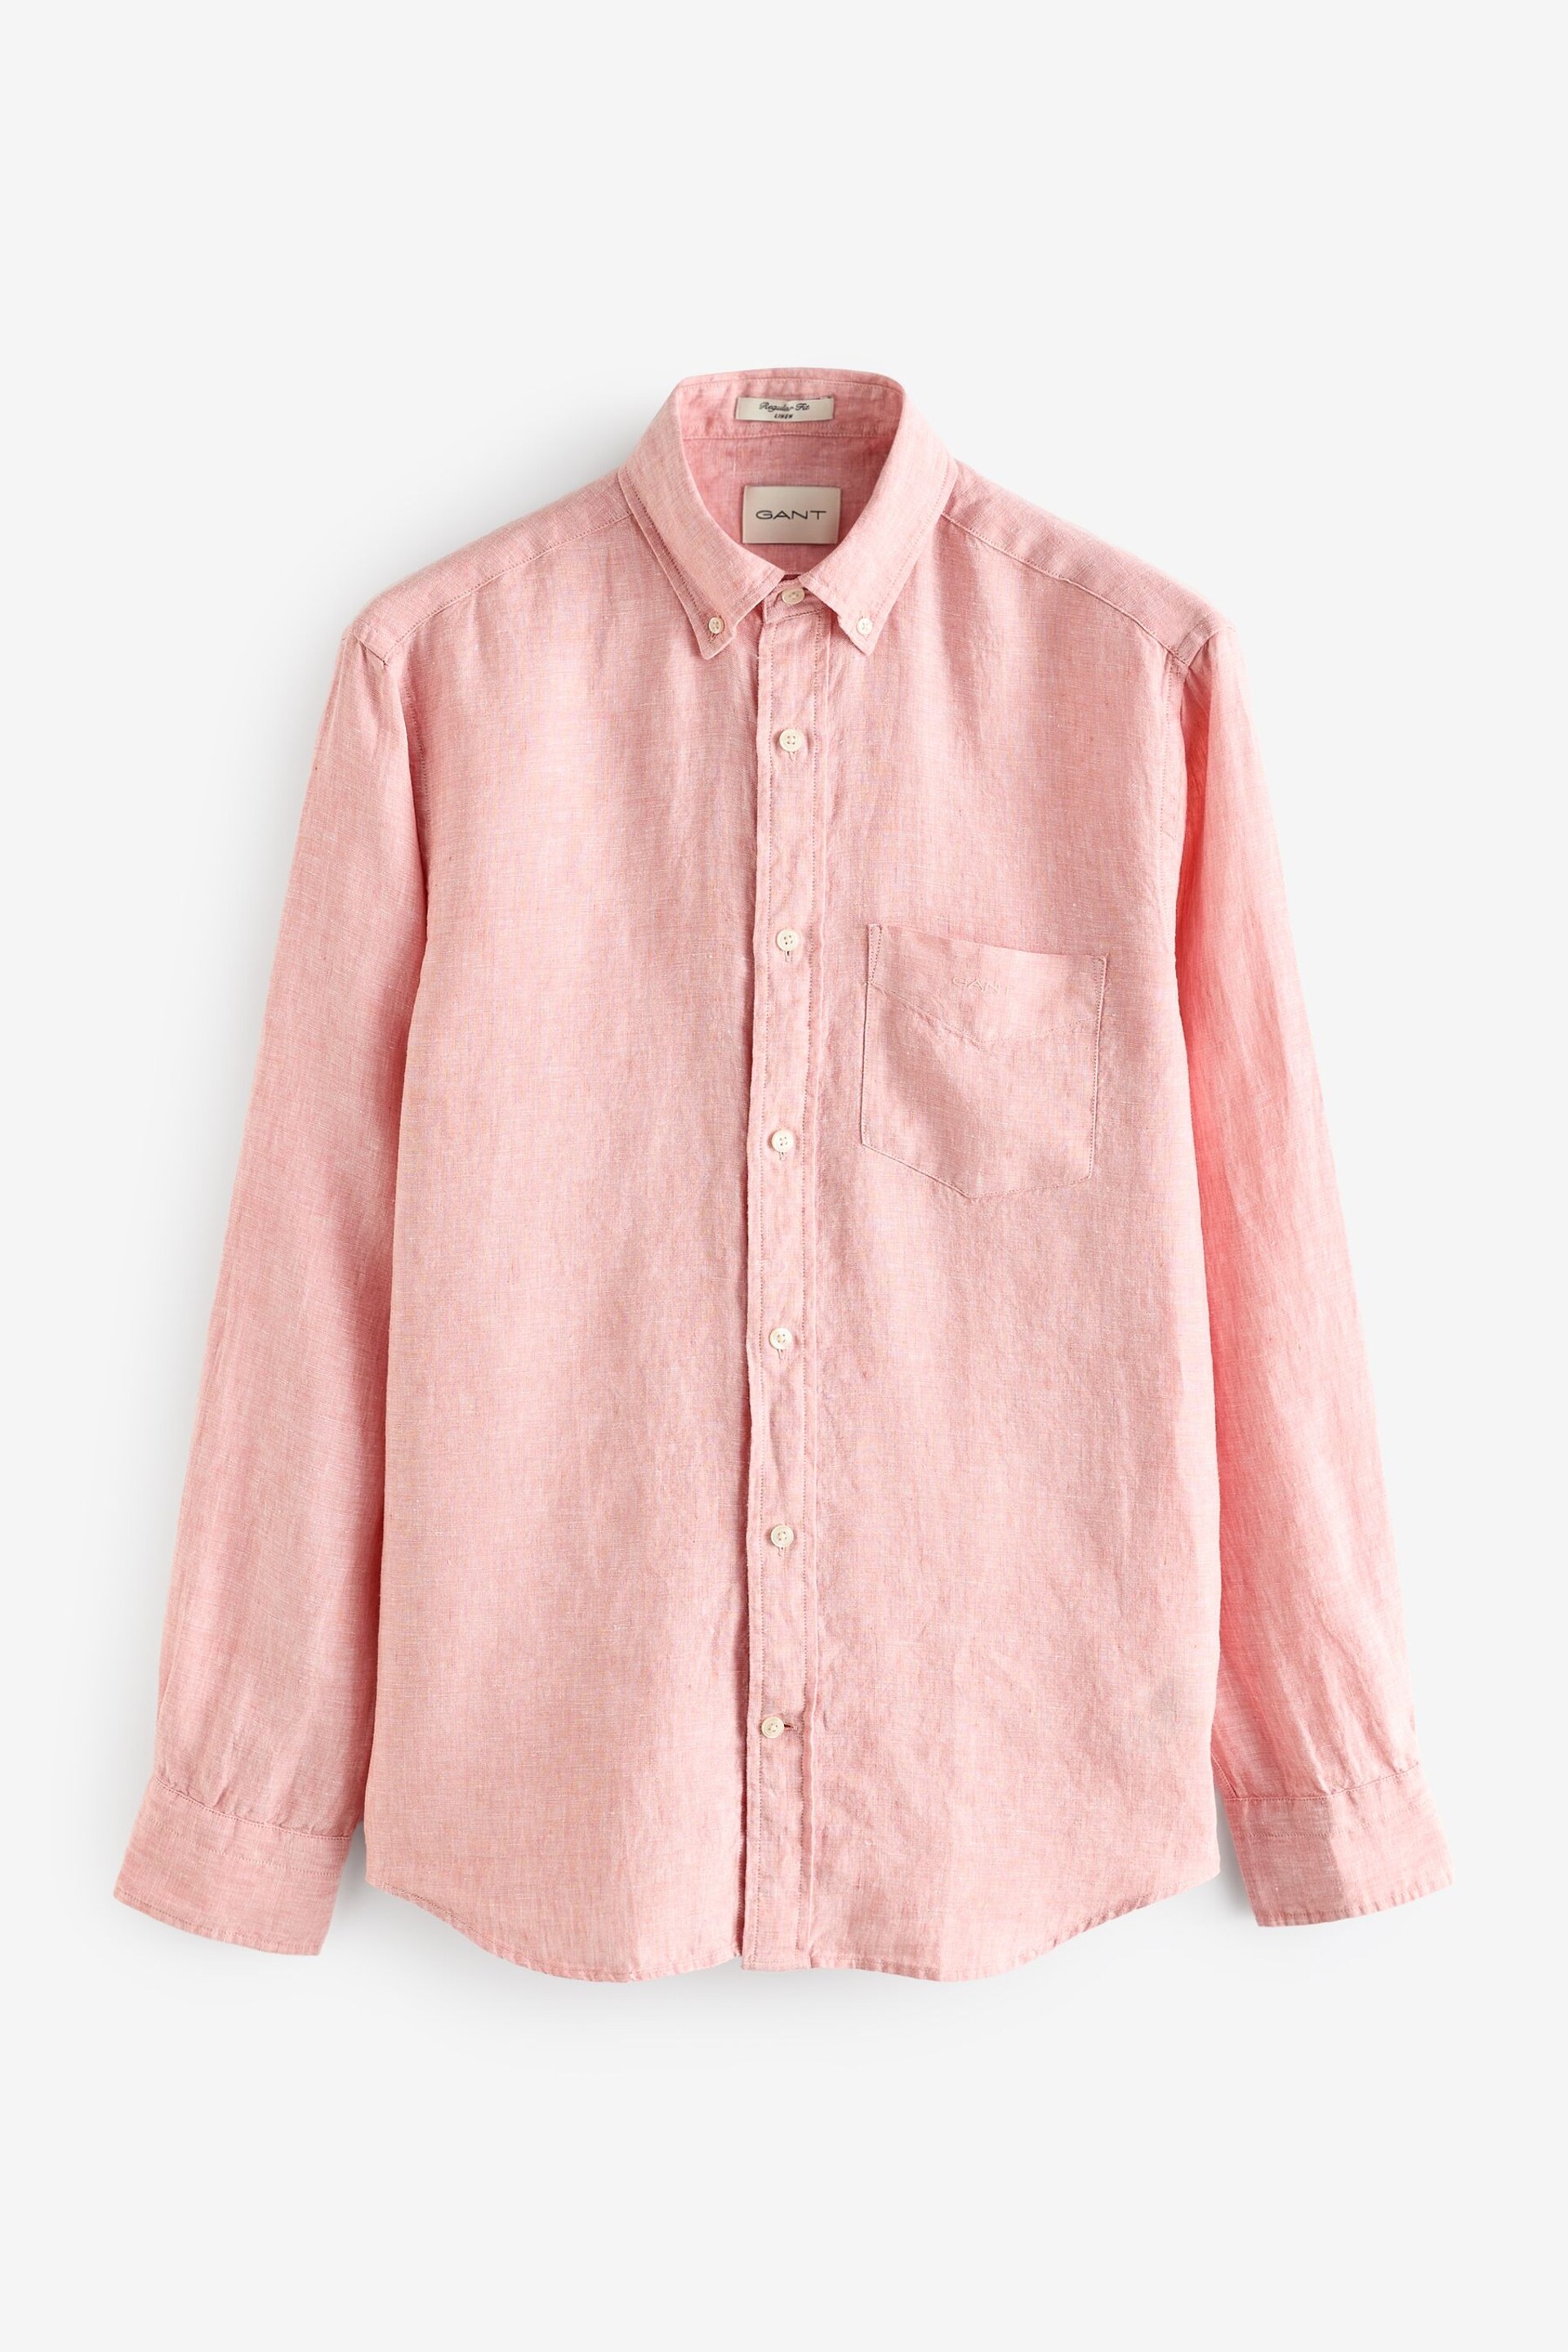 GANT Pink Regular Linen Shirt - Image 4 of 4